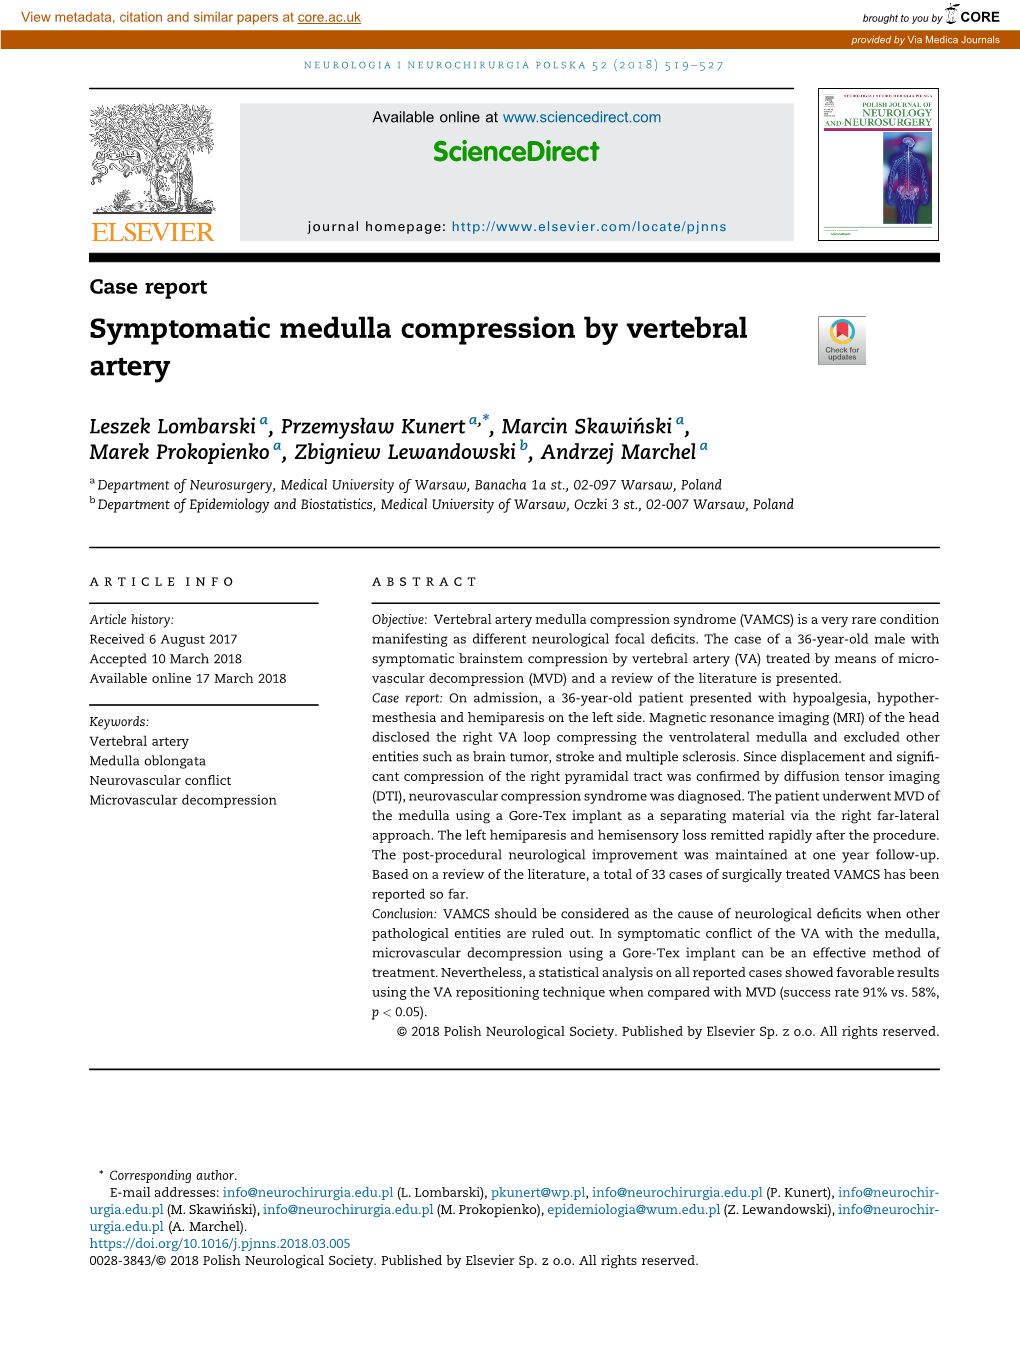 Symptomatic Medulla Compression by Vertebral Artery